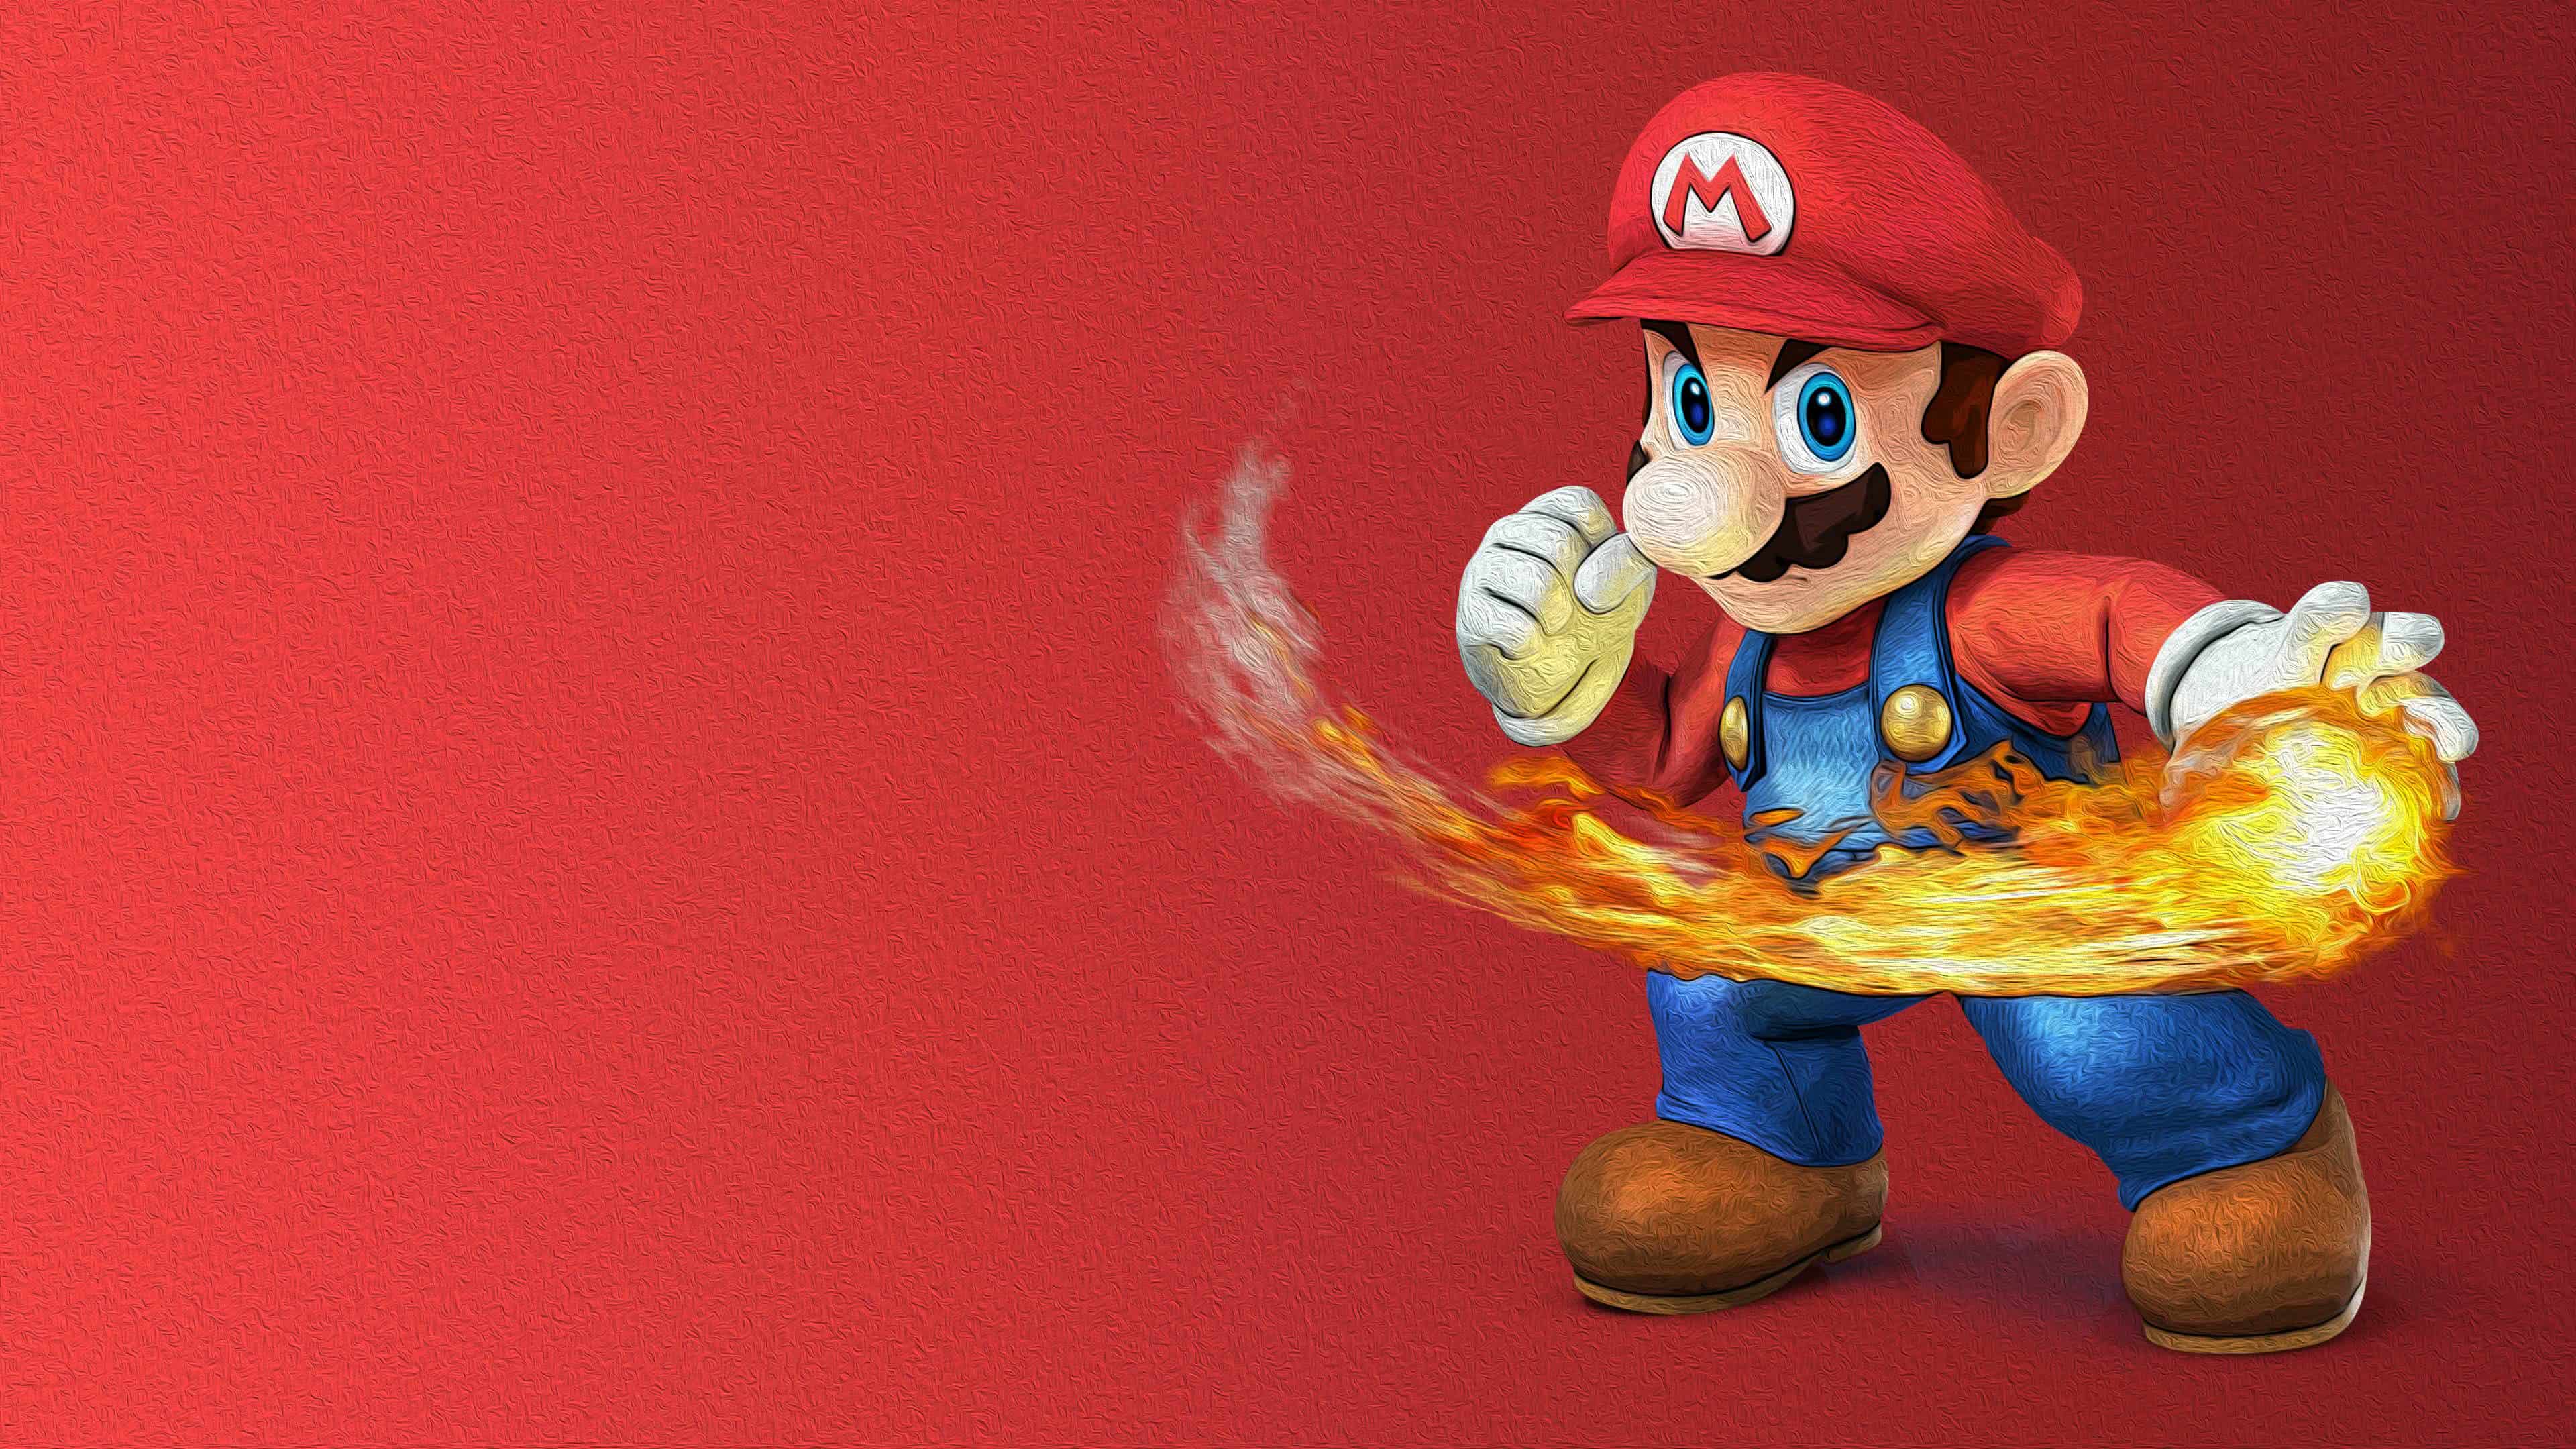 Mario Rabbids Kingdom Battle Uhd 4k Wallpaper Smash Bros